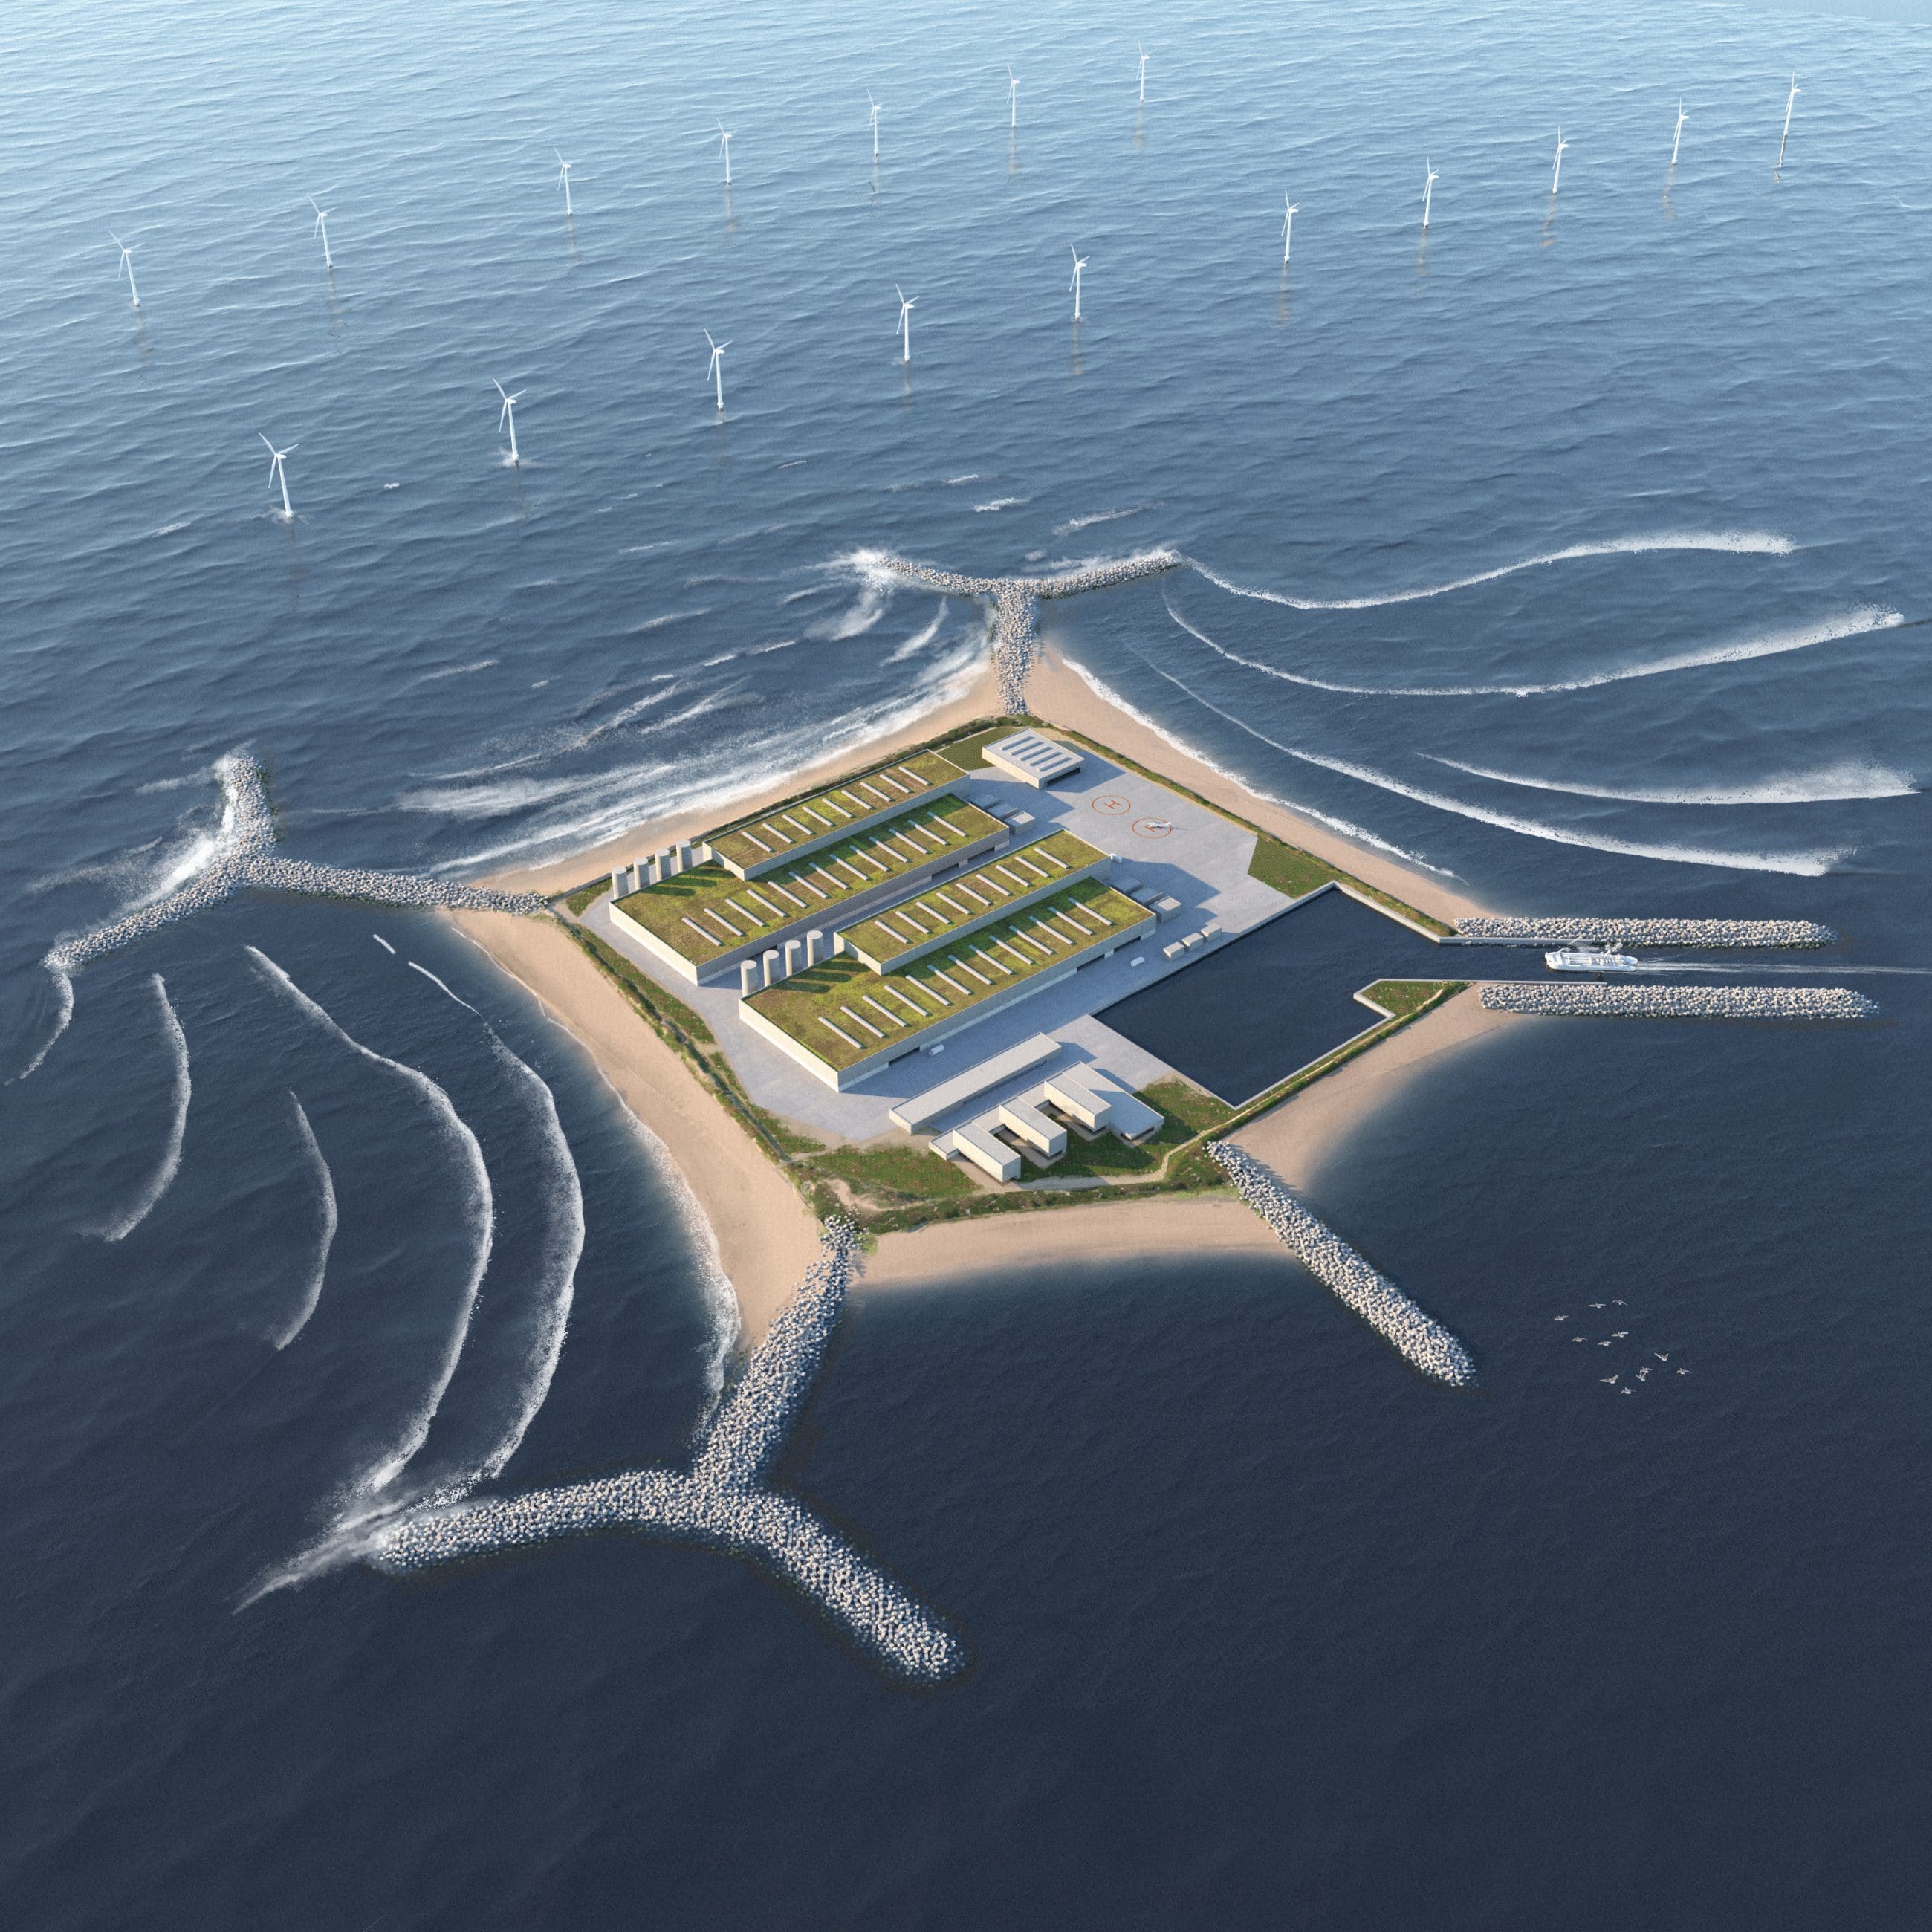 Energy island with minimal environmental impact